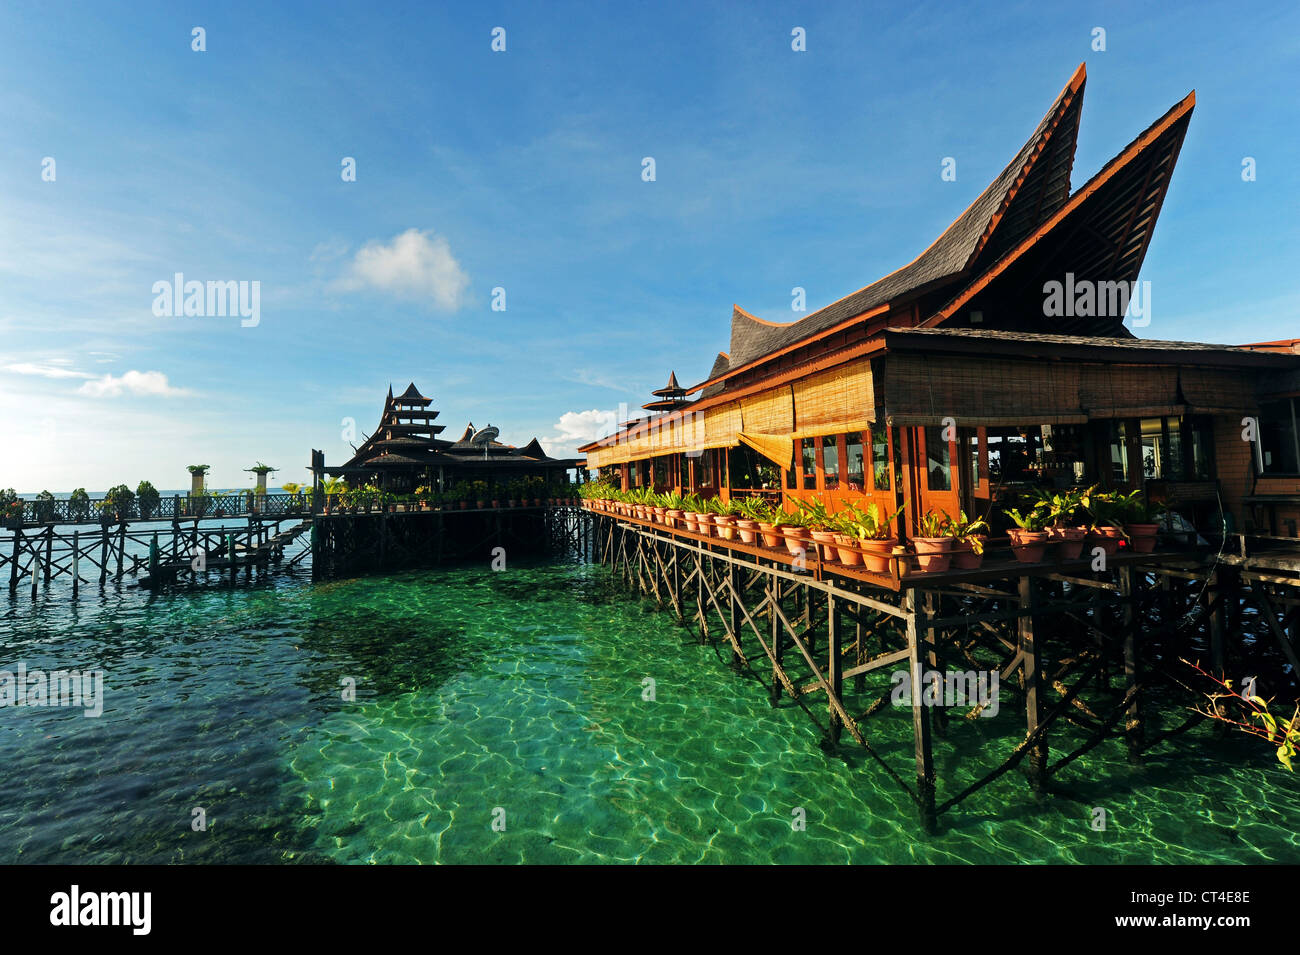 Malaysia, Borneo, Semporna, Mabul, Luxus-Hotel mit Bungalows auf Stelzen Stockfoto